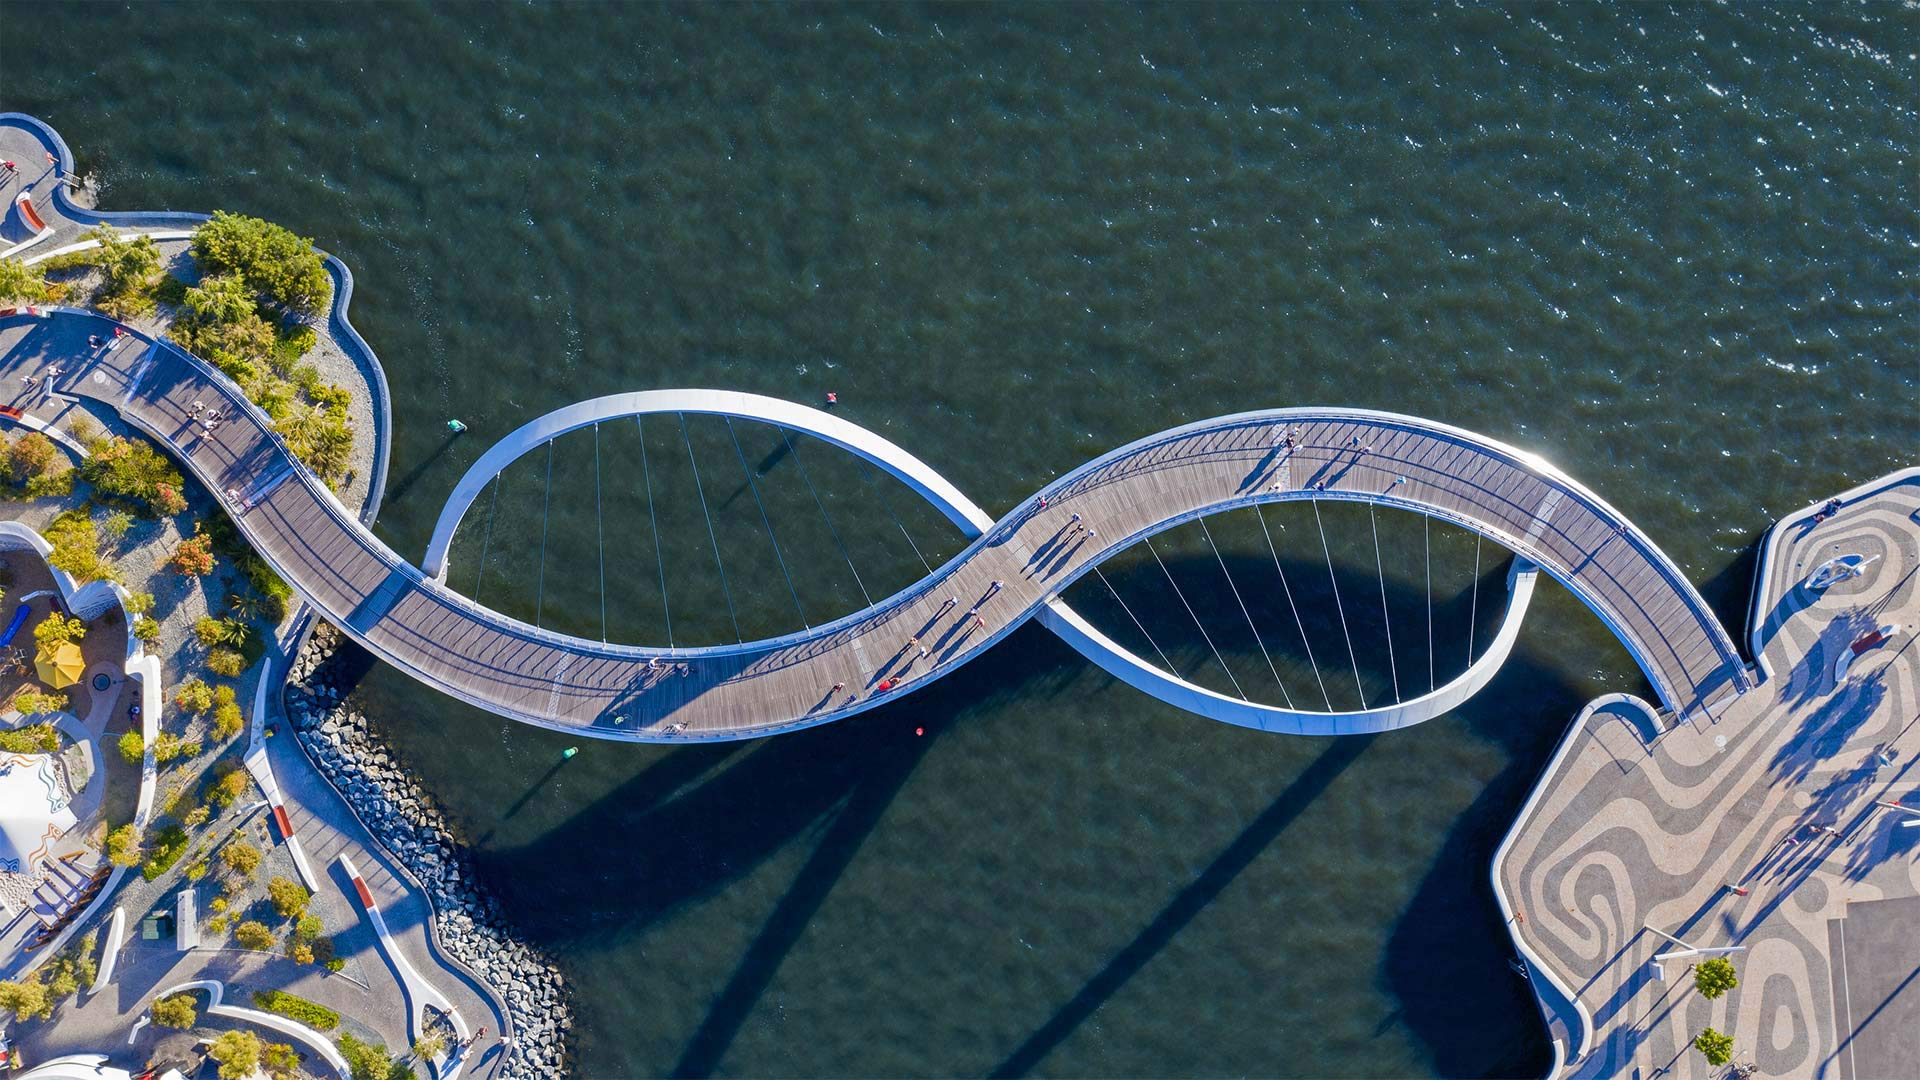 Elizabeth Quay Bridge in Perth, Australia - Amazing Aerial Agency/Offset by Shutterstock)